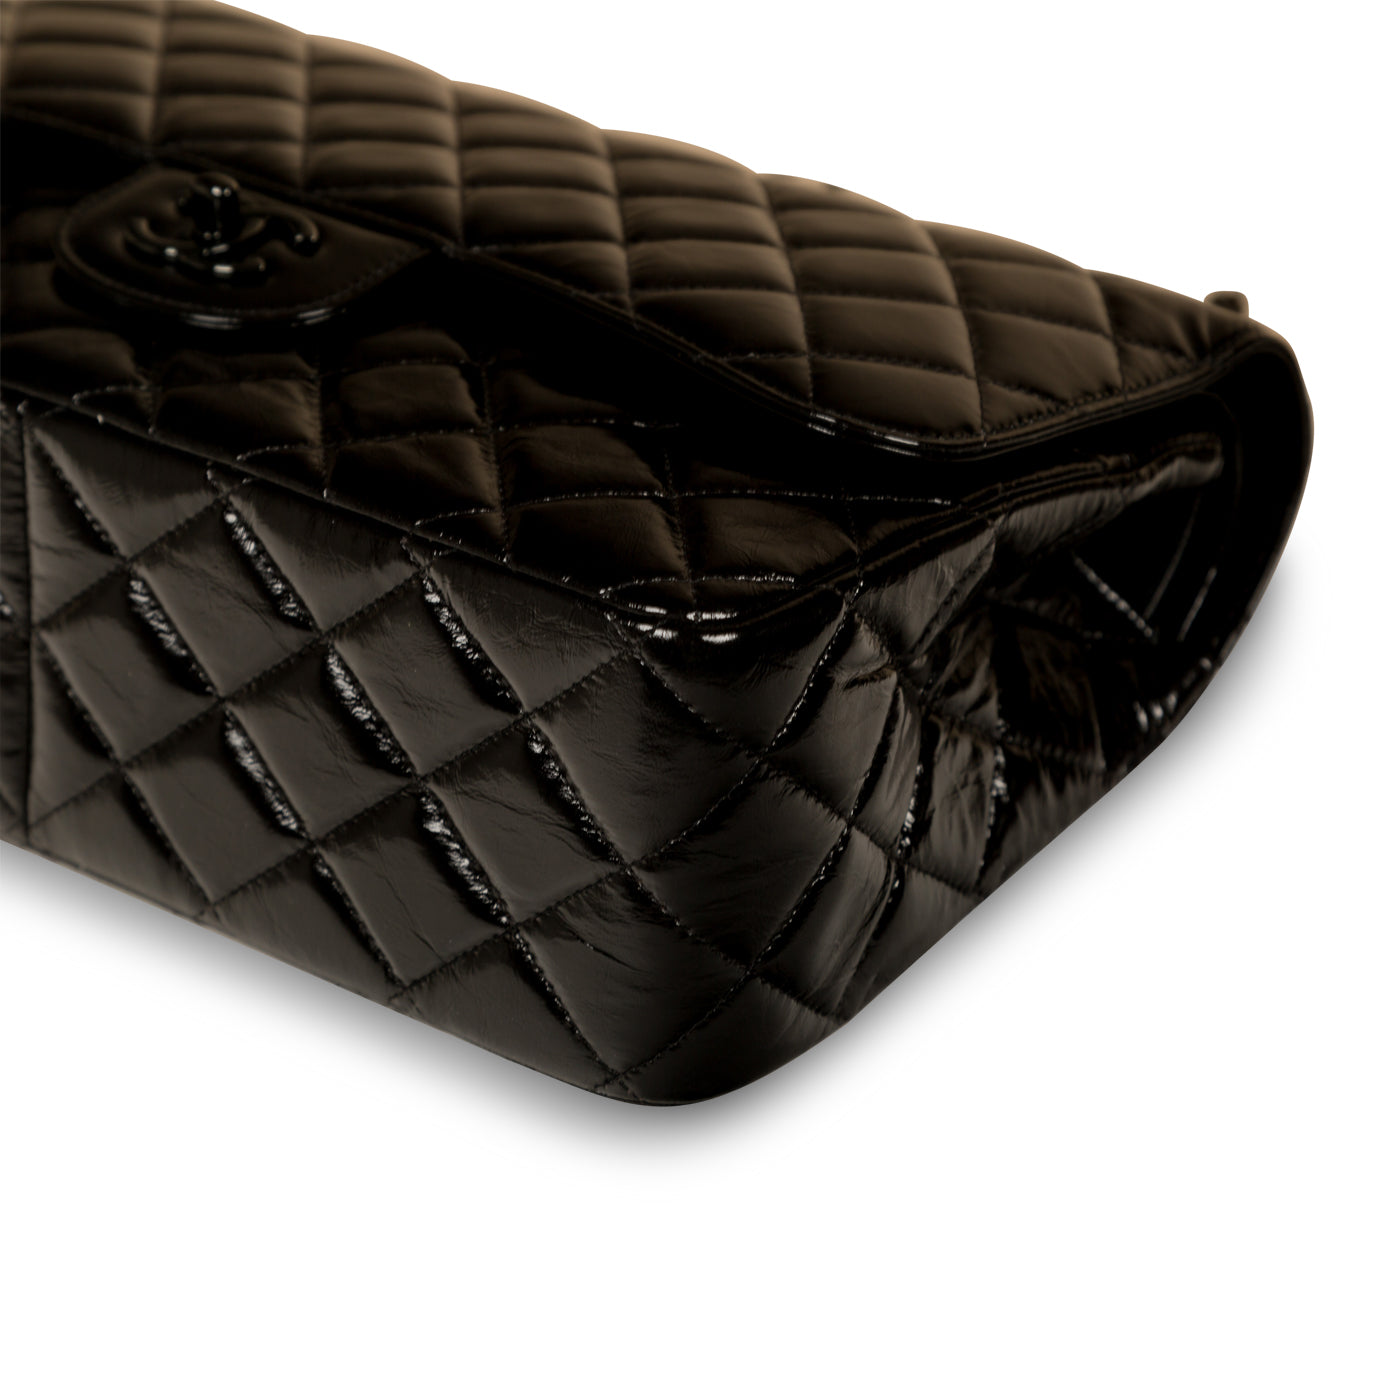 Chanel - So Black Classic Flap Bag Jumbo - Black Glazed Leather - BHW -  Immaculate